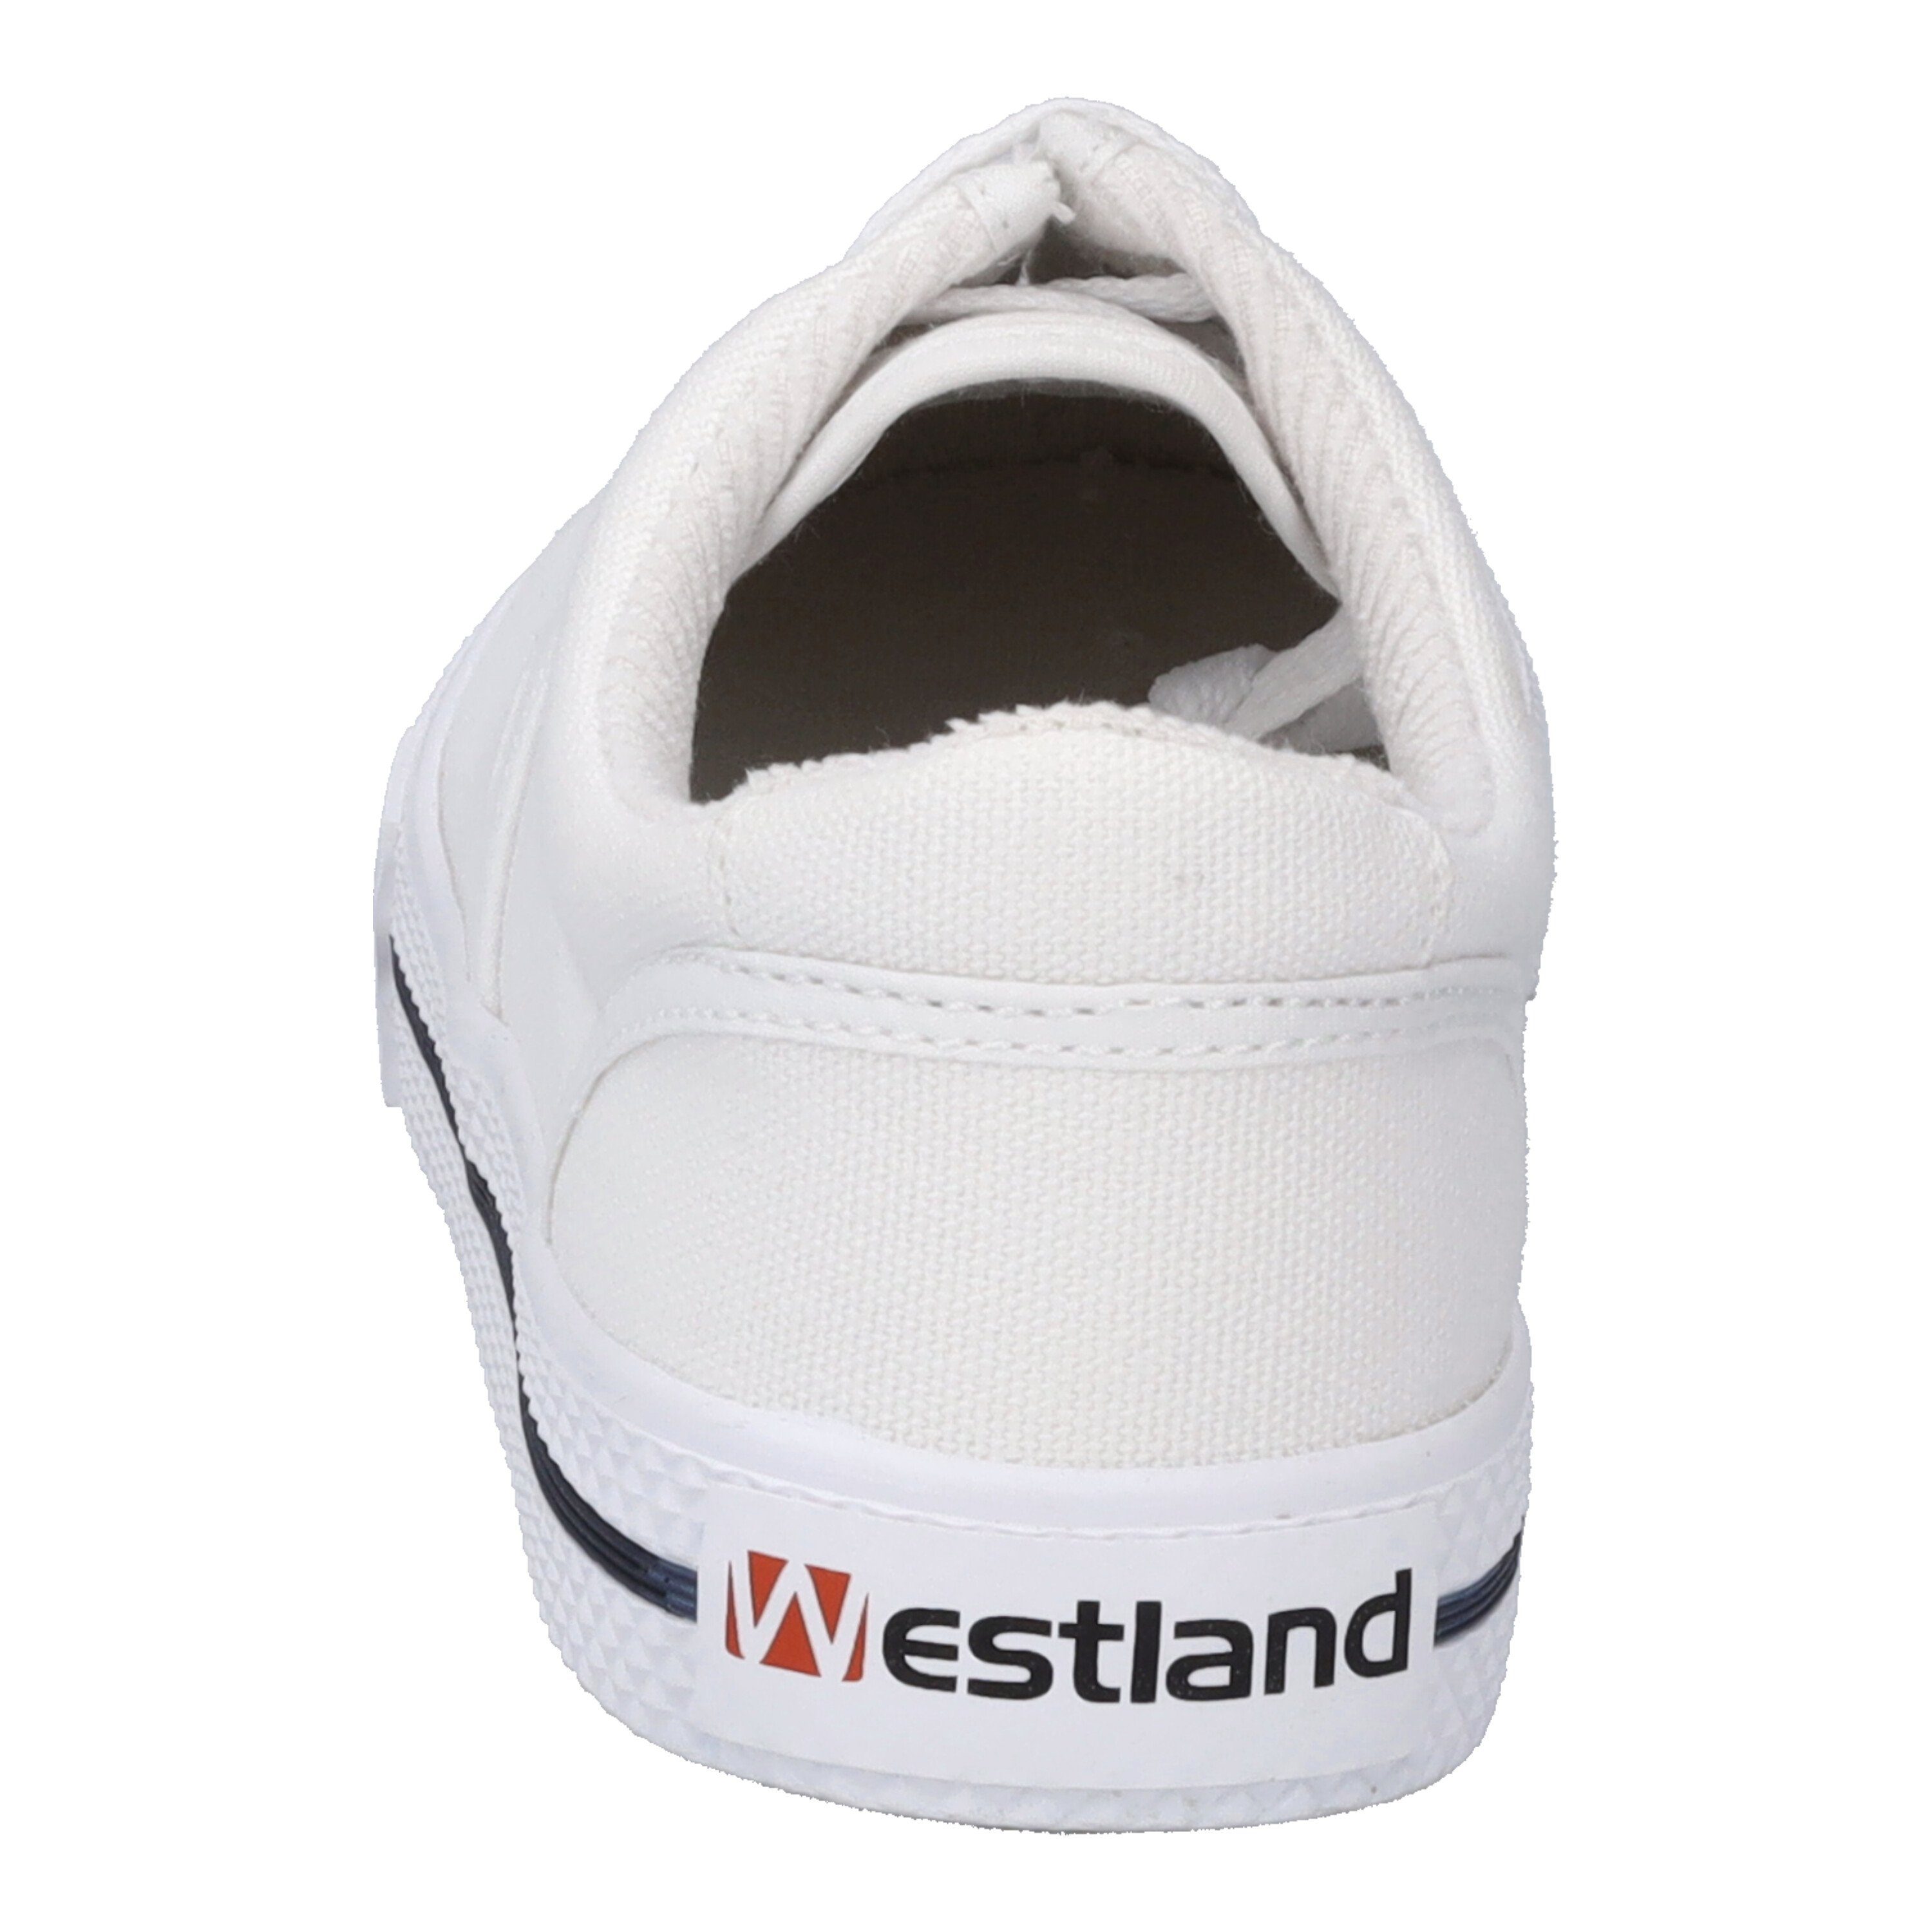 Soling, Westland weiss weiß Sneaker